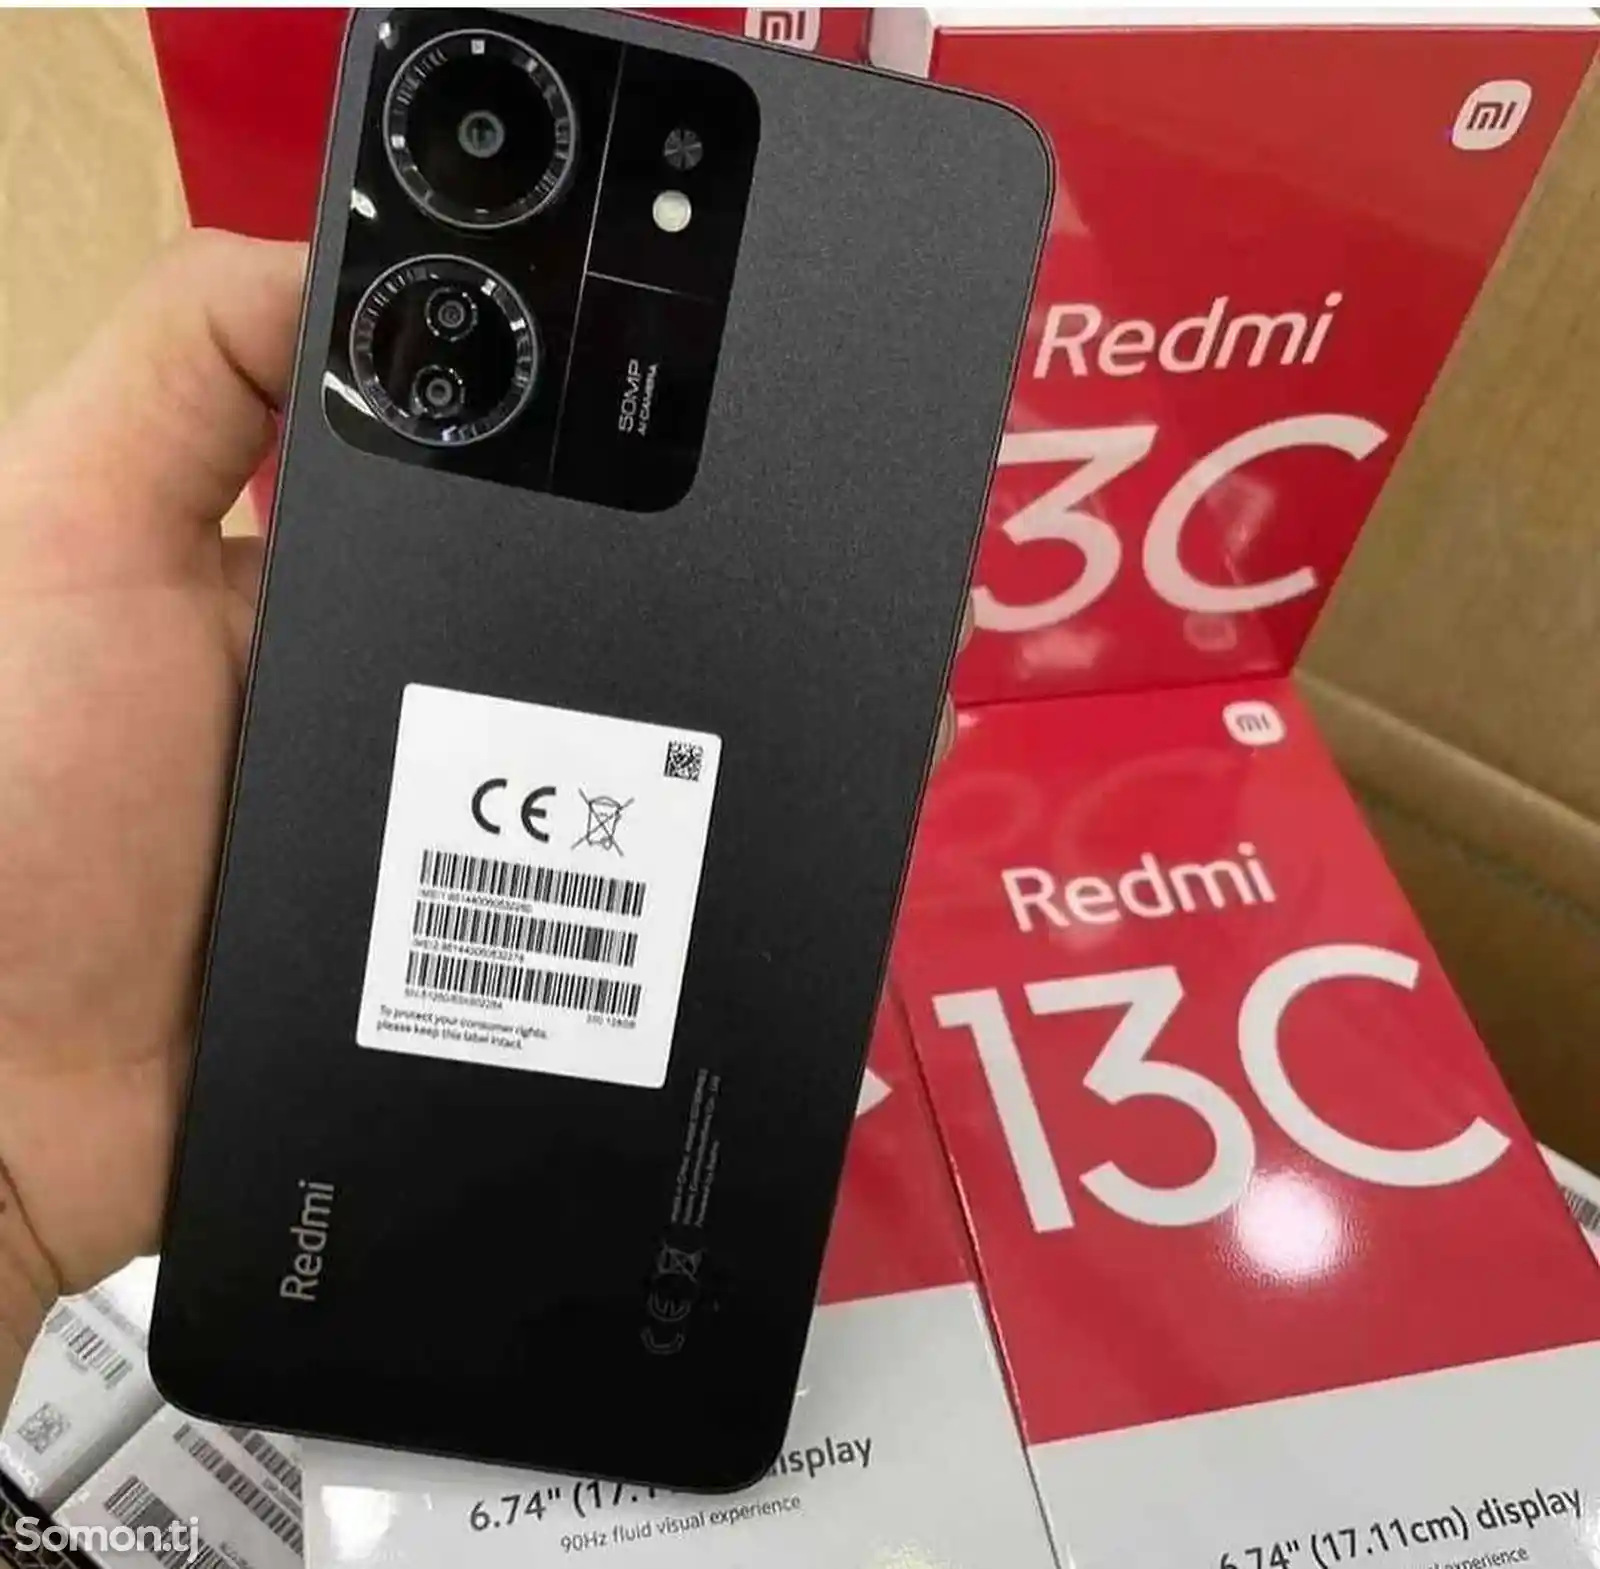 Xiaomi Redmi 13C 128Gb black-9